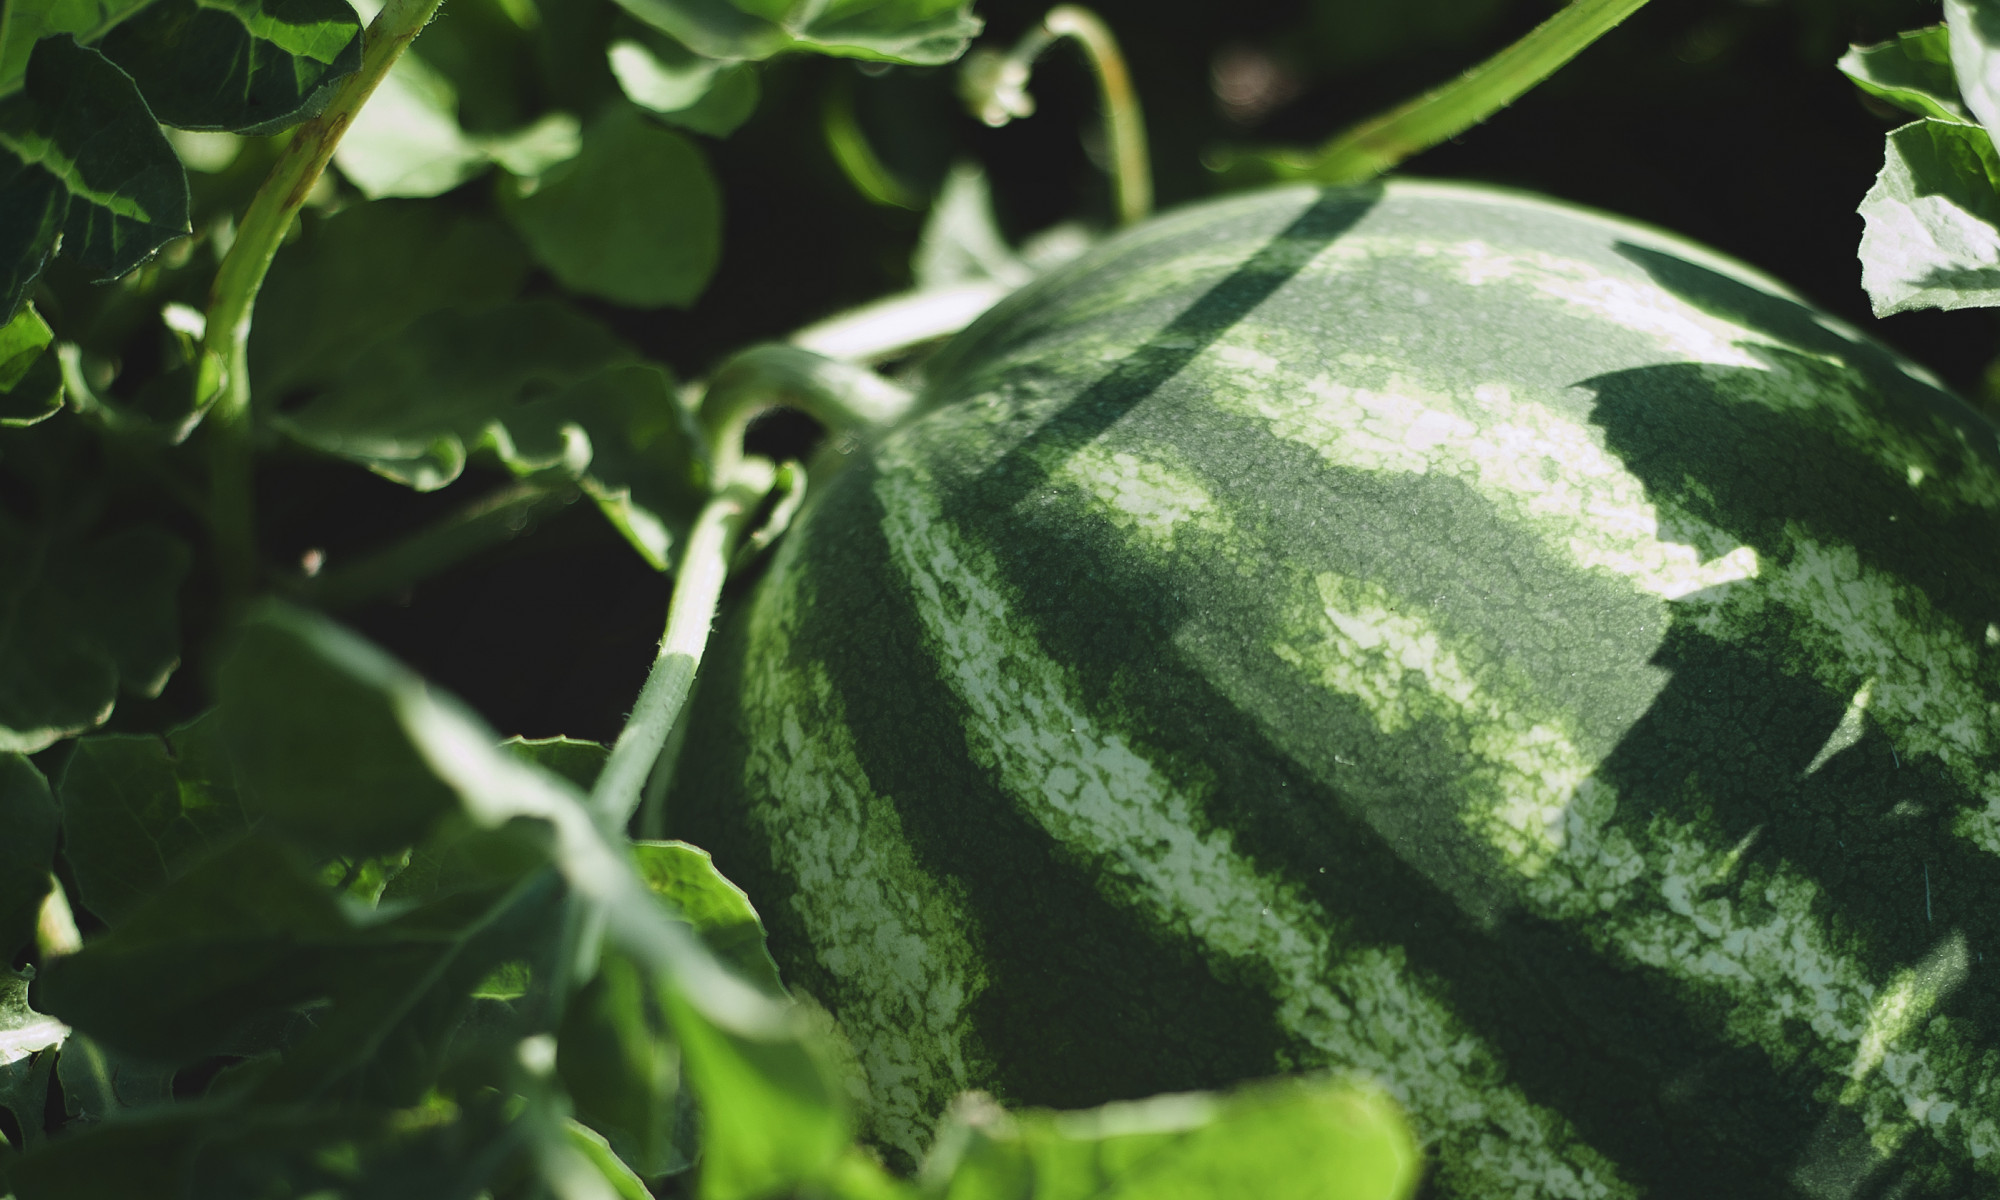 watermelon/plant close up picture